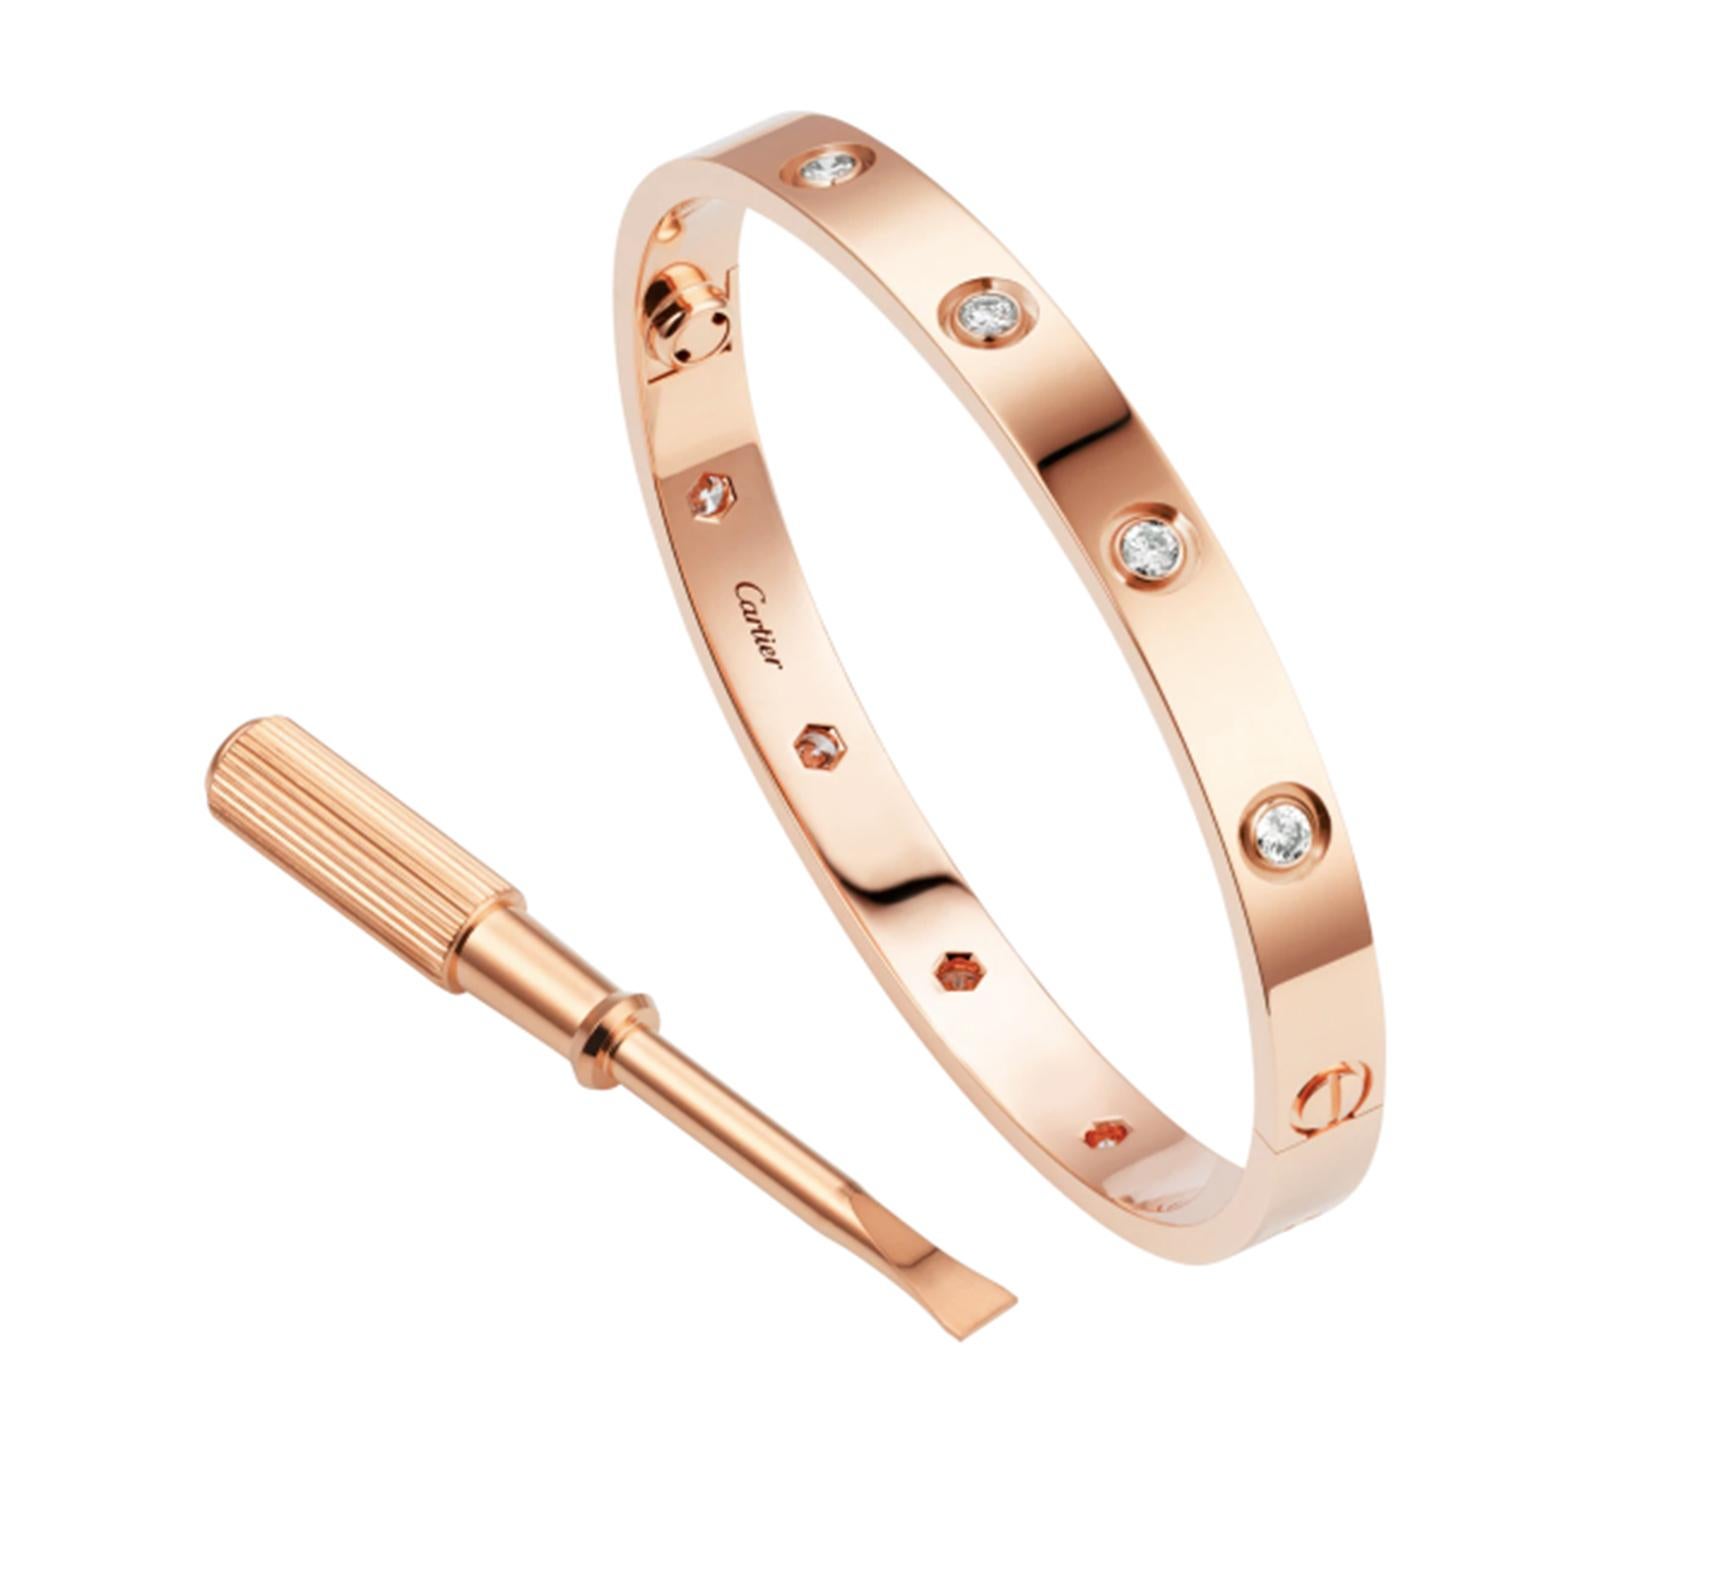 Designer: Cartier

Collection: Love

Style: Bangle Bracelet

Metal: Rose Gold

​​​​​​​Metal Purity: 18k

Stone: Round Brilliant Cut Diamonds

Total Carat Weight: 0.96 ct

Bracelet Size: 18 = 18 cm

Hallmarks: 18, Au750 Cartier, Serial No.,

Retail: